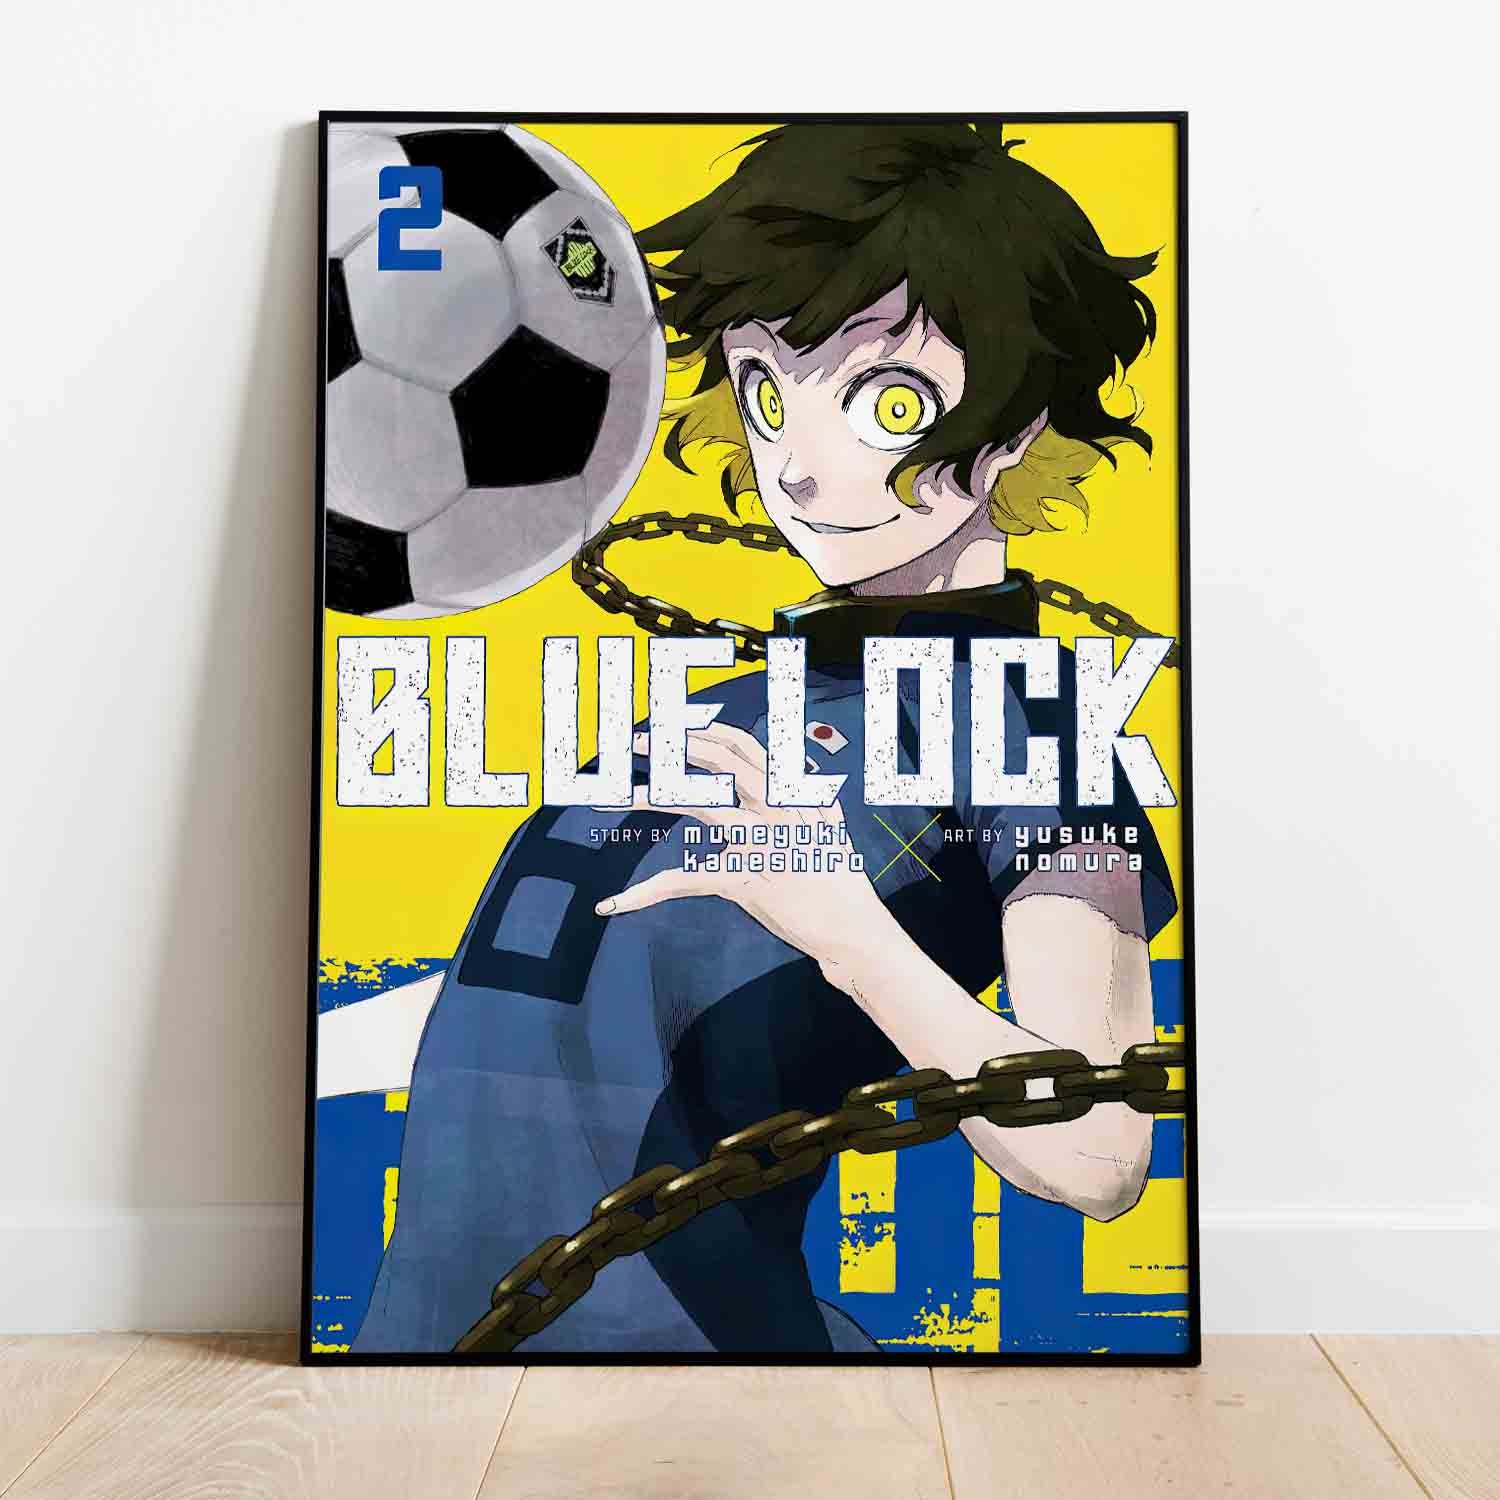 Blue Lock vs. Aoashi: Which soccer anime reigns supreme? - Hindustan Times